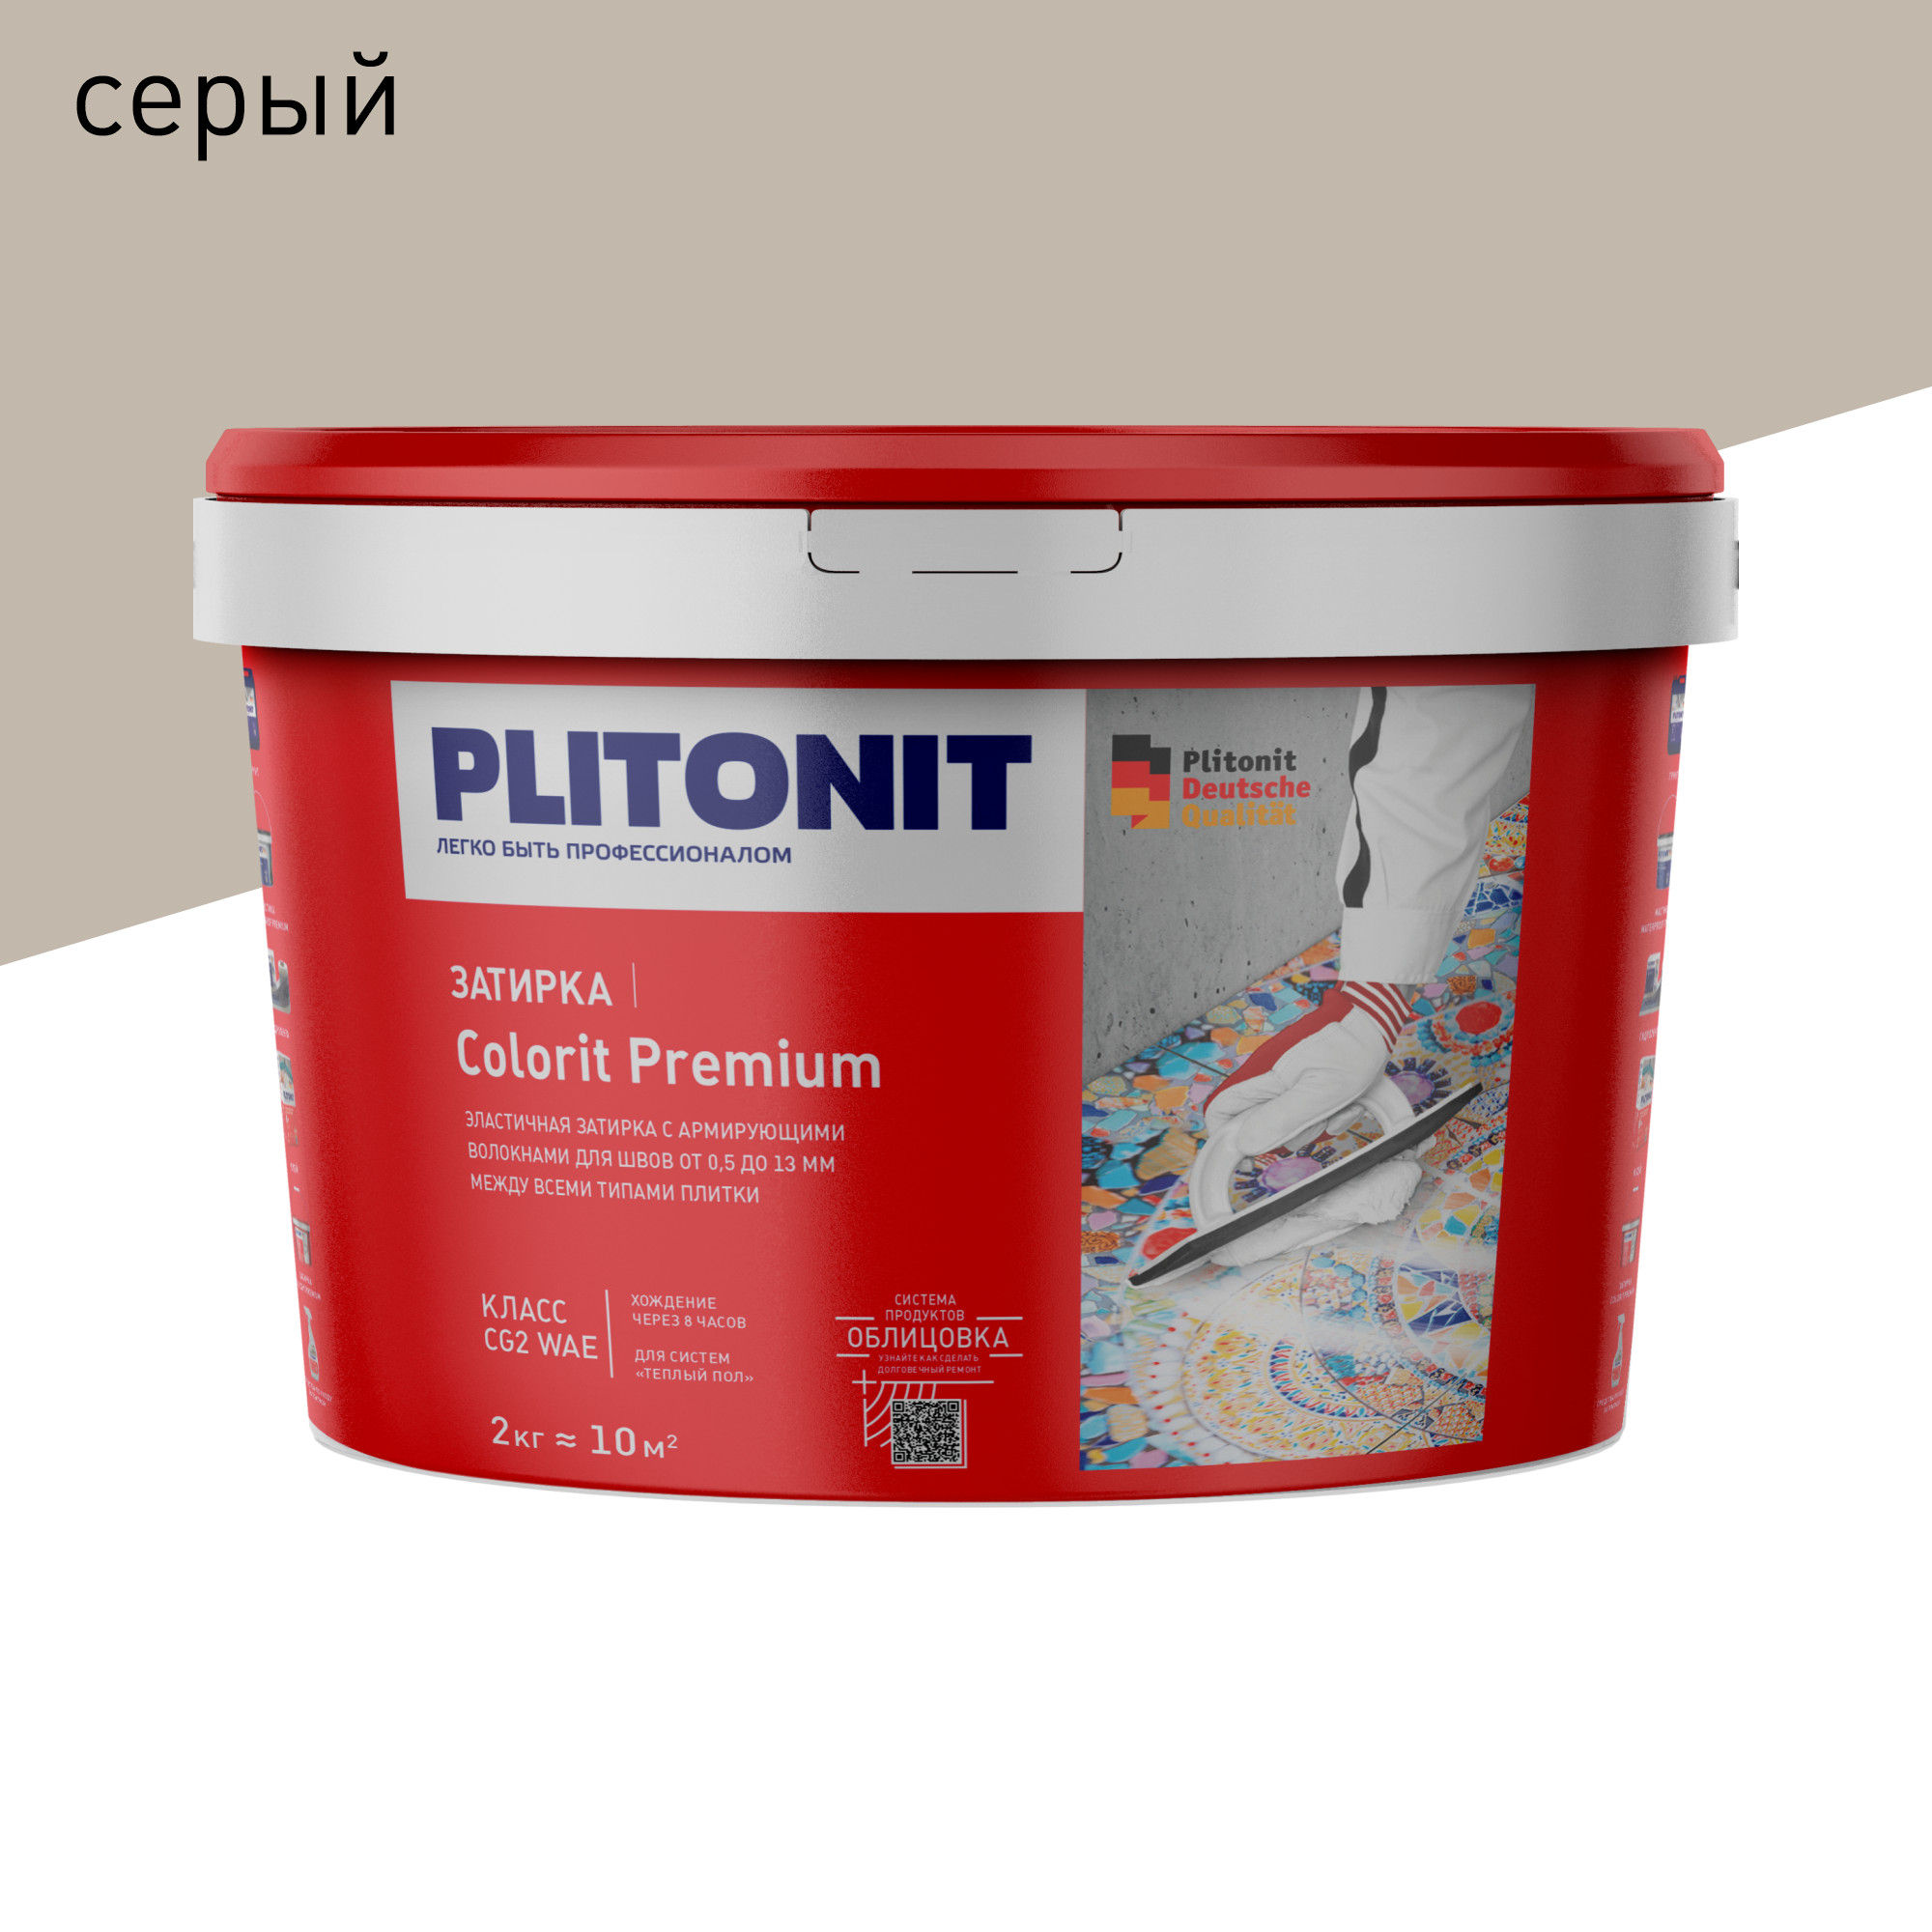 Затирка PLITONIT Colorit Premium серая 2 кг затирка plitonit colorit premium светло серая 2 кг